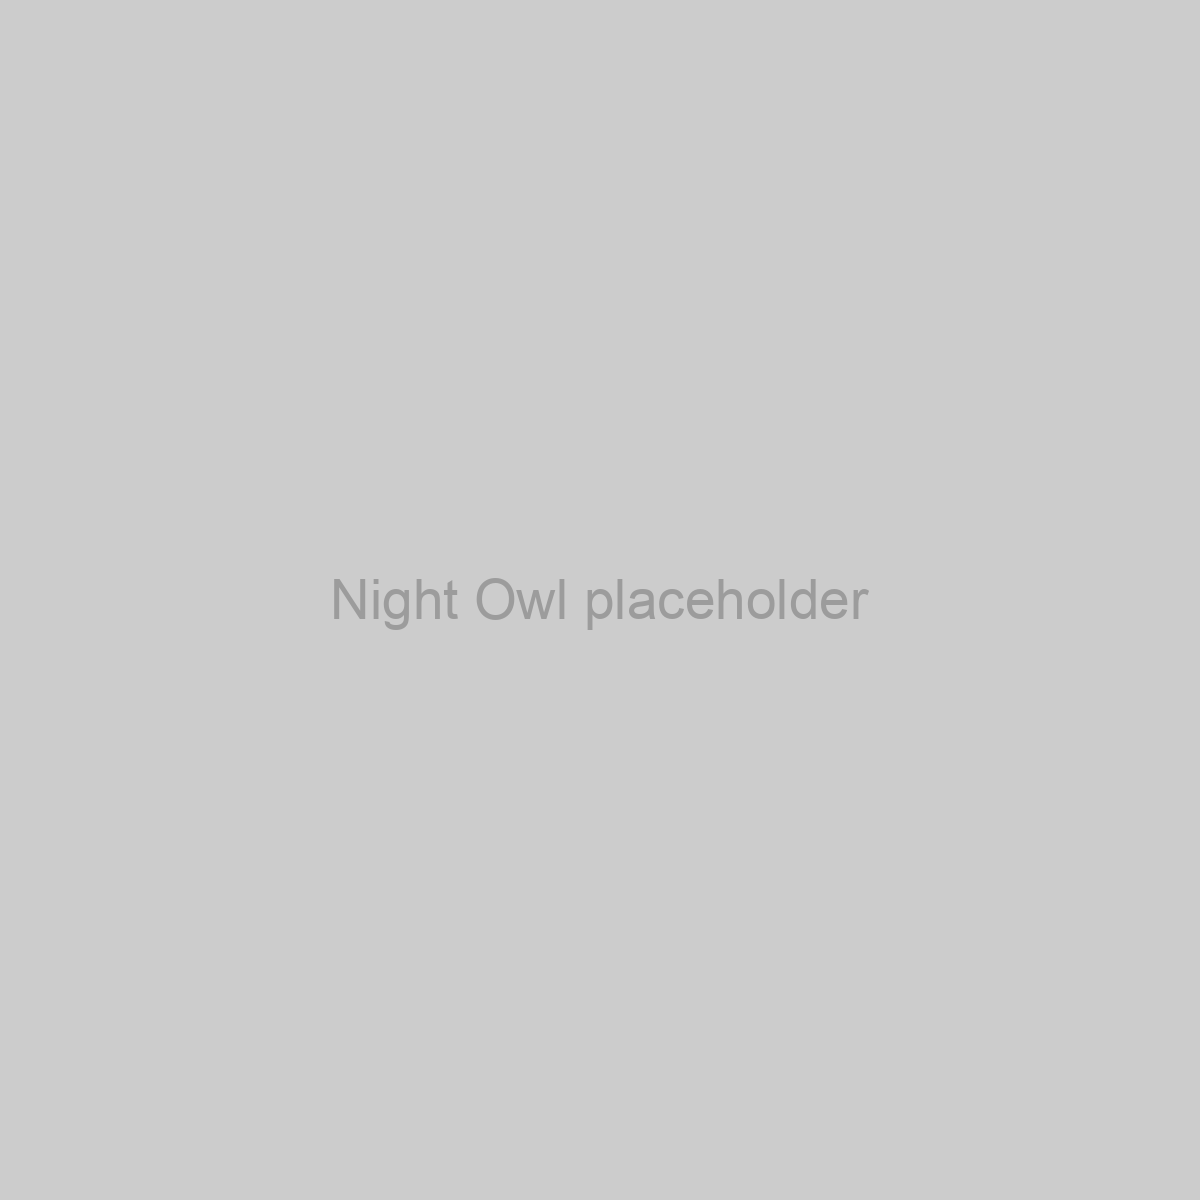 Night Owl Placeholder Image